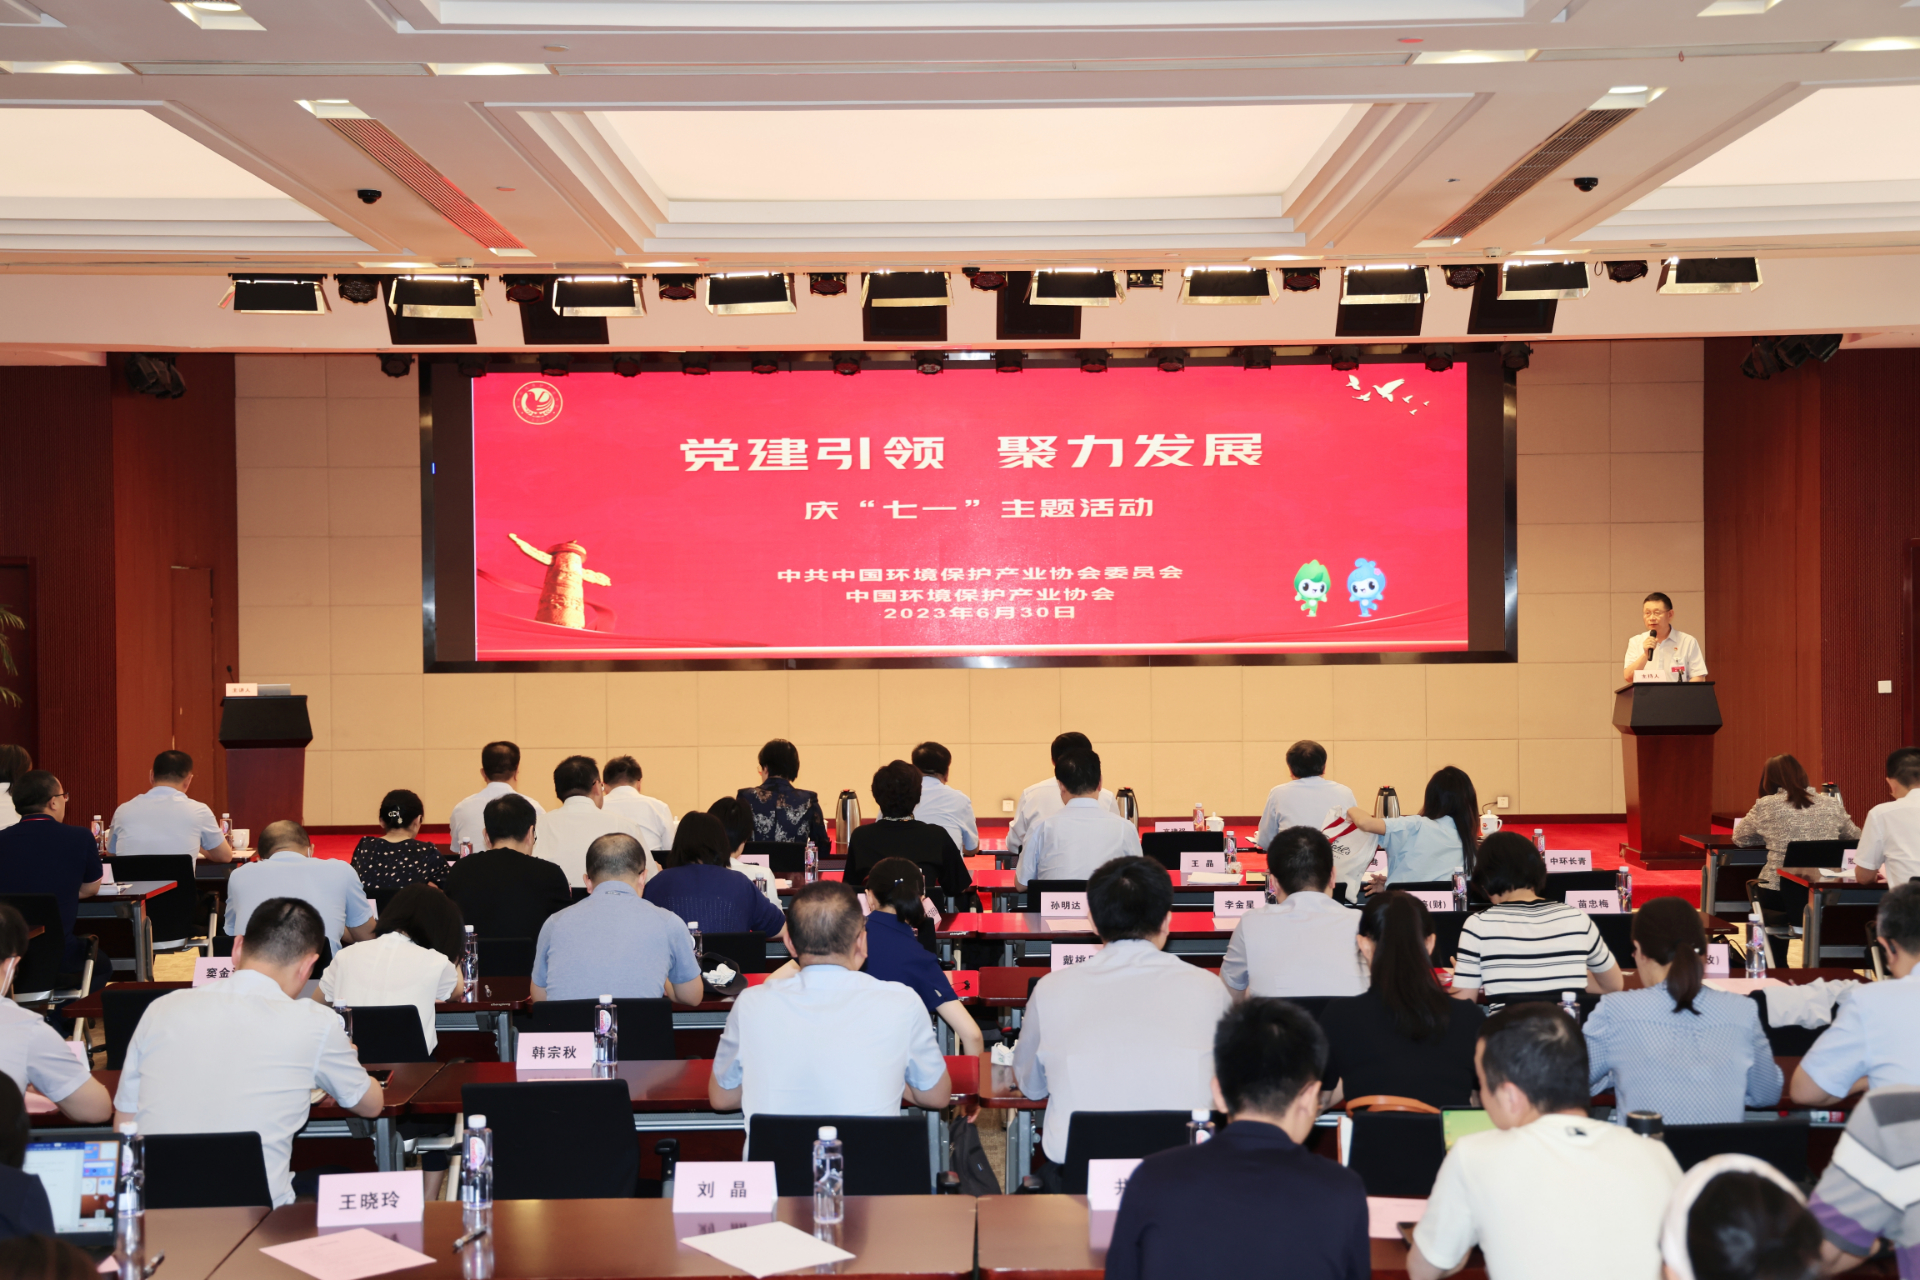 BOB中国环境保护产业协会举办七一主题活动环保企业共话党建引领环保产业高质量发展